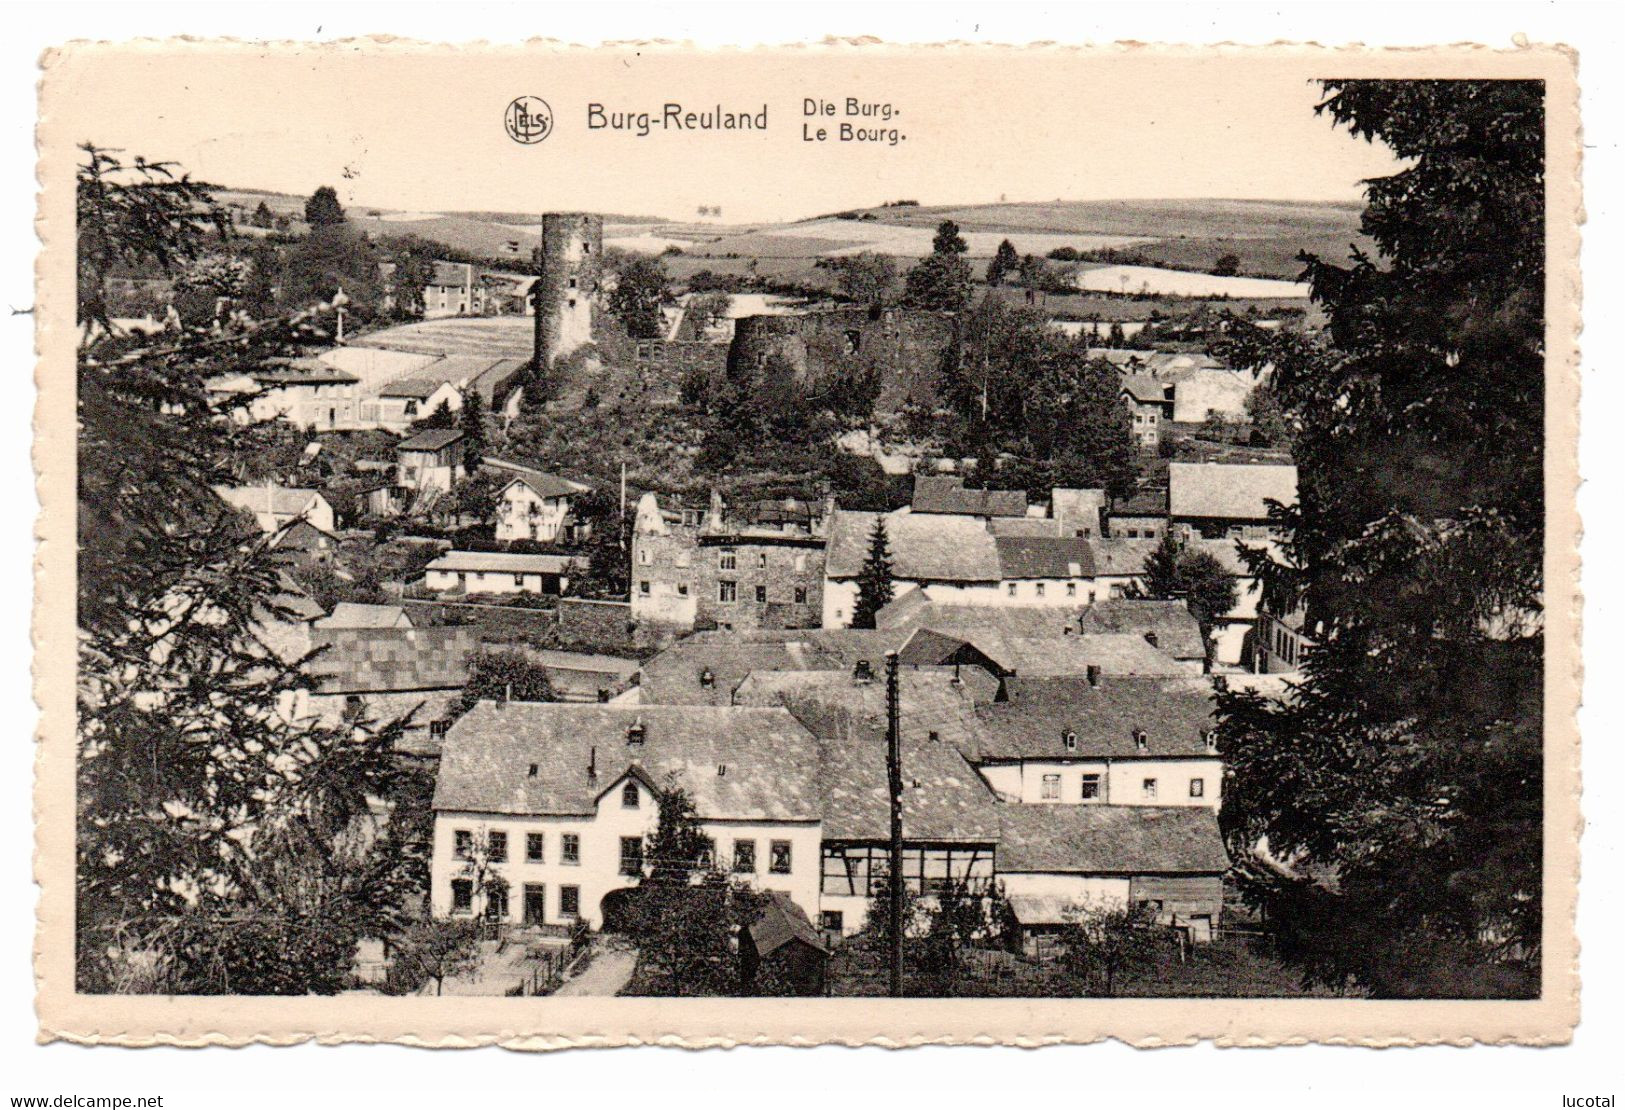 Burg Reuland - Le Bourg - Die Burg - 1952 - Editeur Nels / Photo A. De Boeck, Burg Reuland - Burg-Reuland